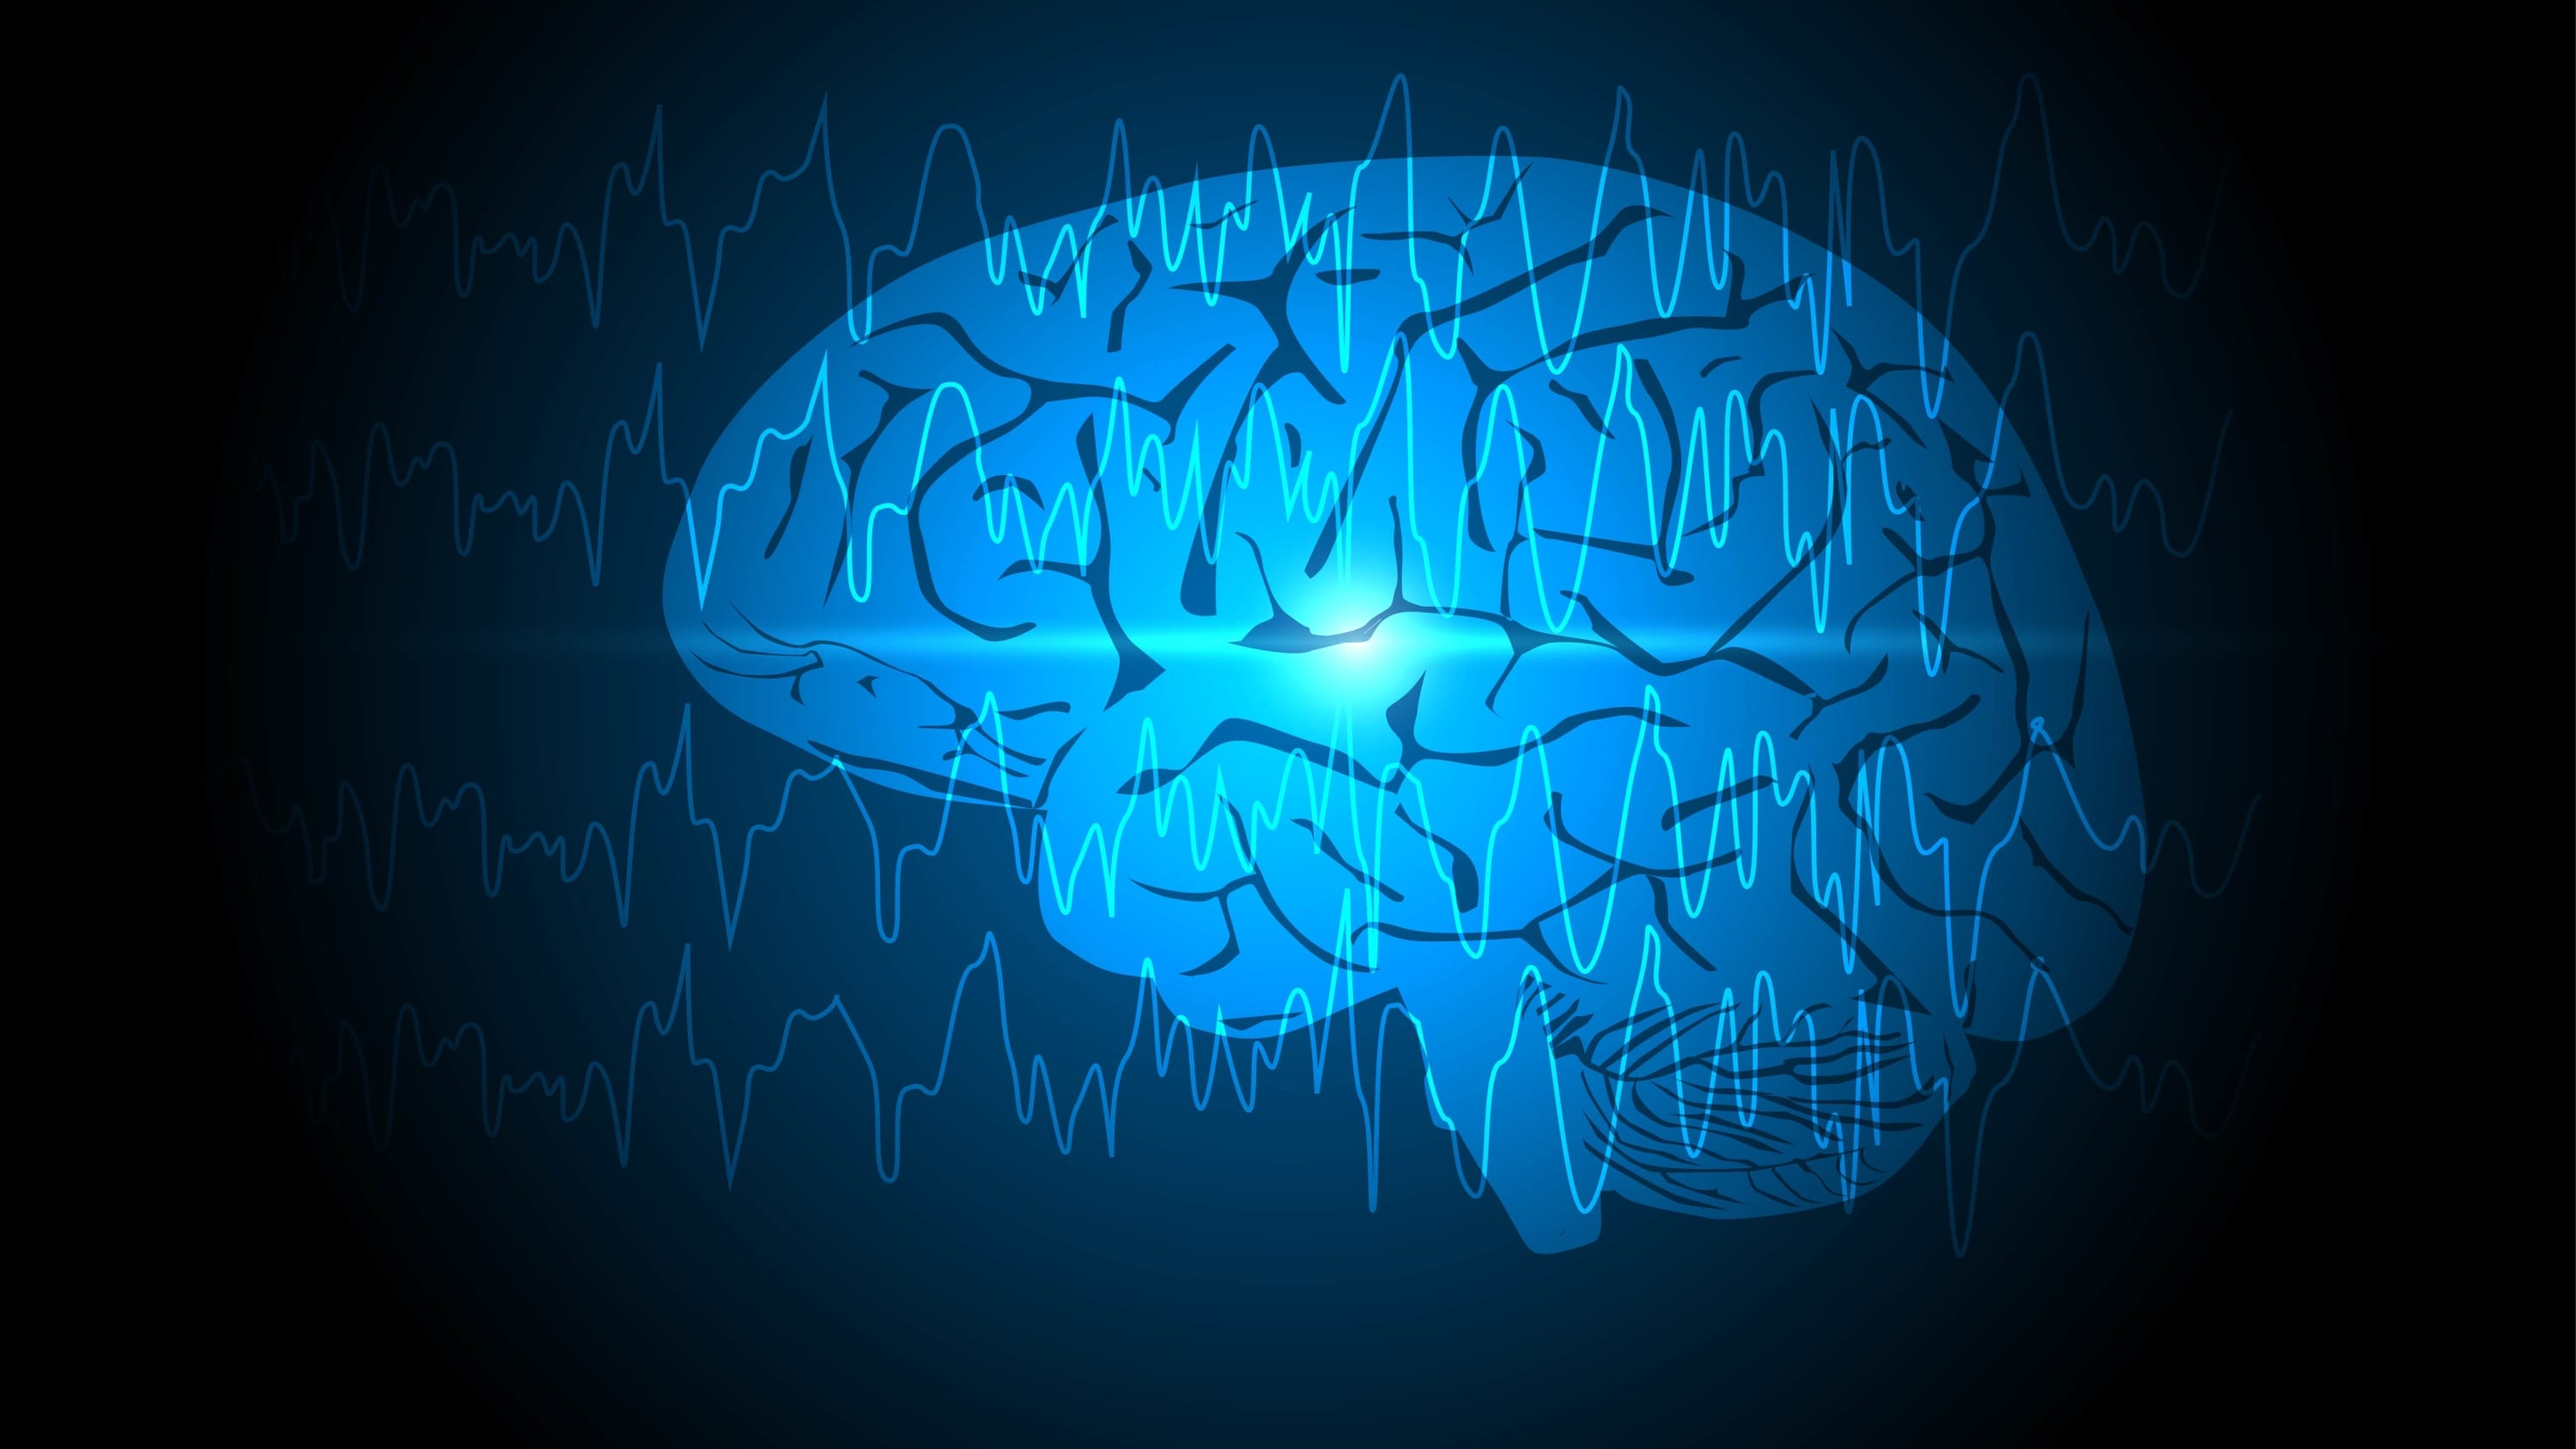 Abnormal brain waves or EEG arising from one region of brain, representing epilepsy or seizures